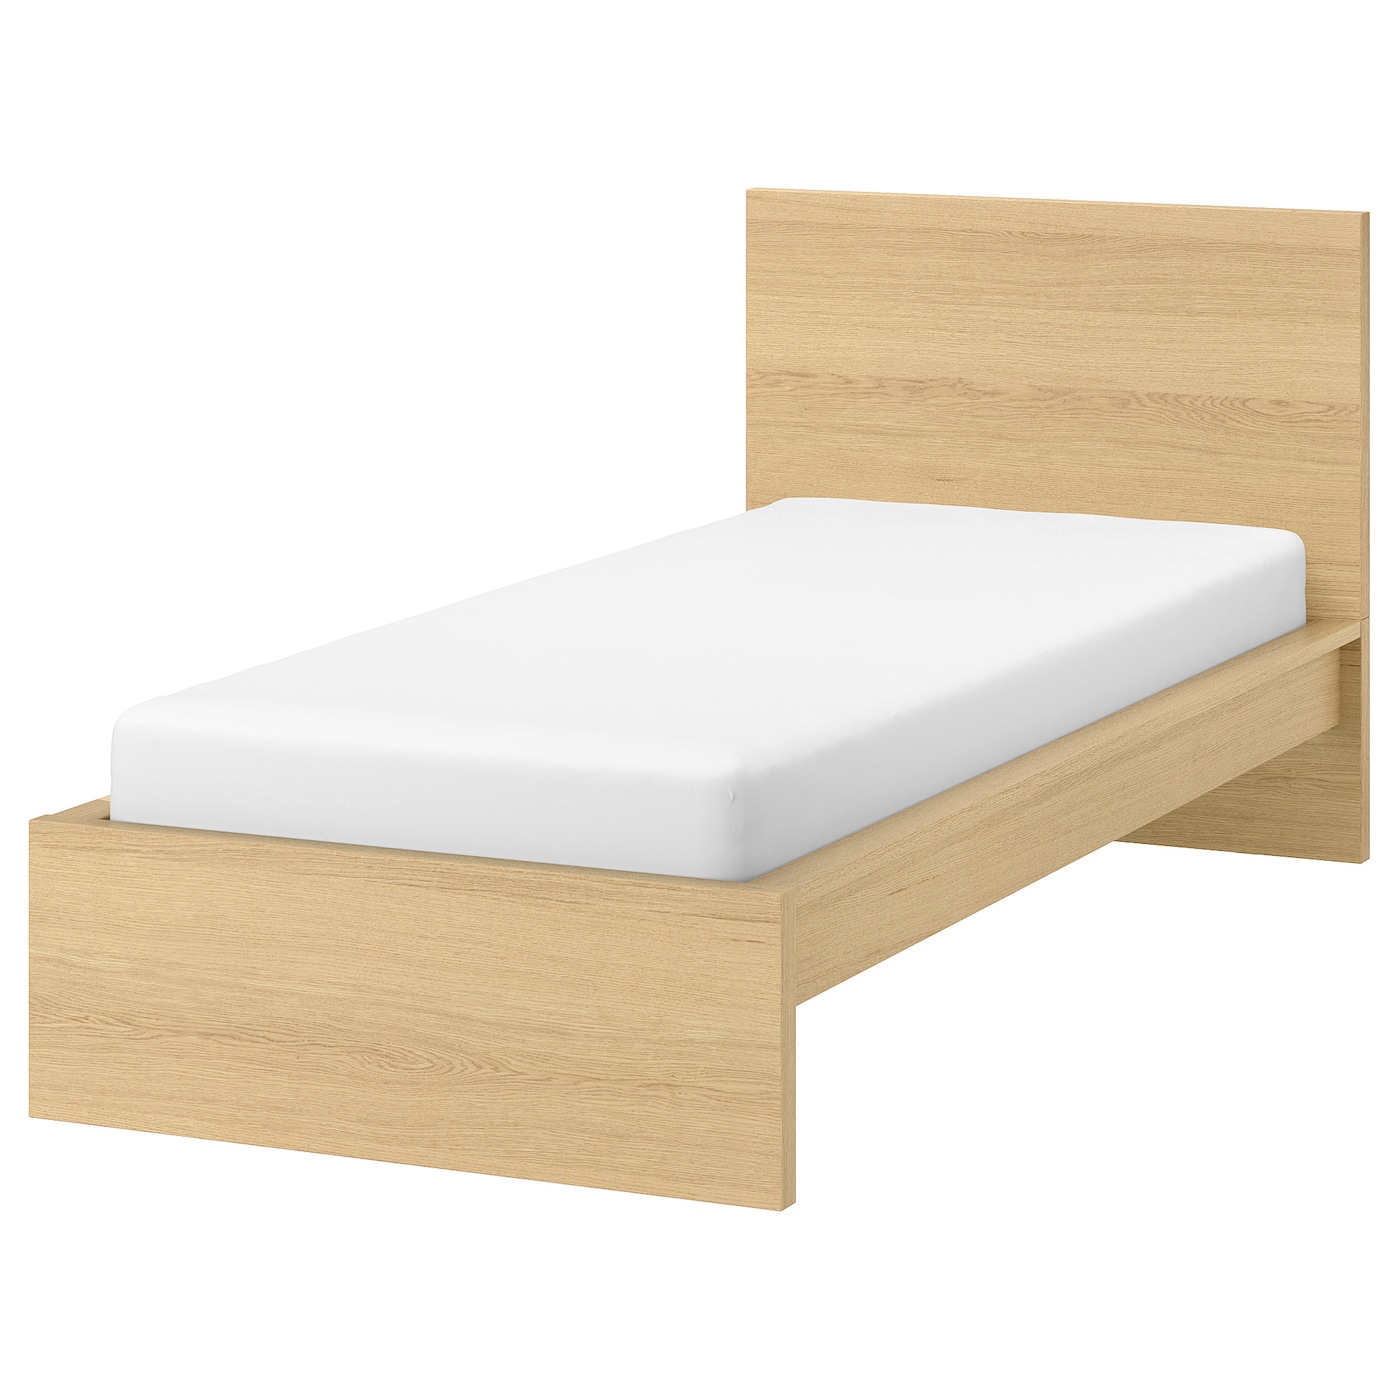 Каркас кровати - IKEA MALM/LÖNSET/LONSET, 200х90 см, под беленый дуб, МАЛЬМ/ЛОНСЕТ ИКЕА